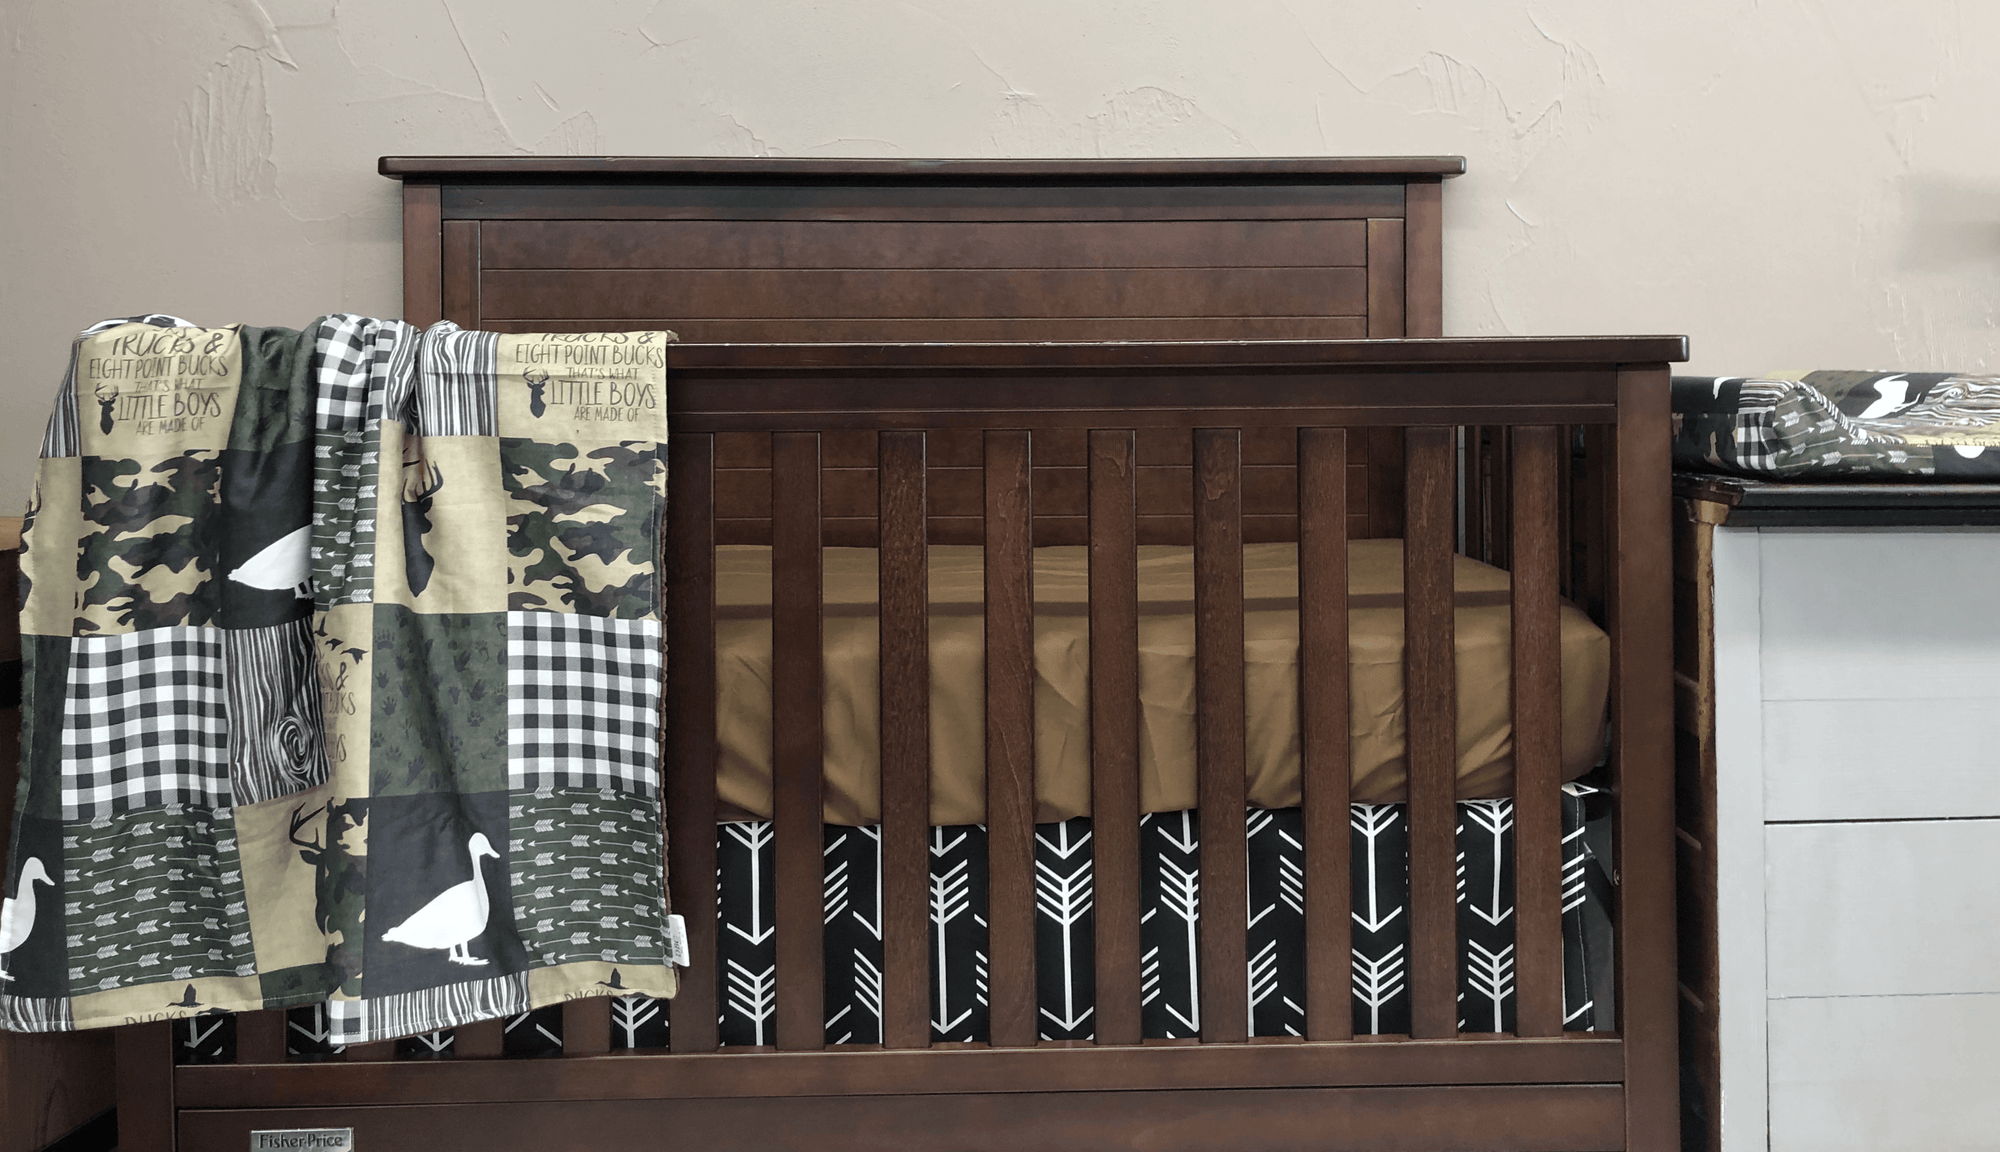 Custom Boy Crib Bedding- Ducks, Trucks, Eight Point Bucks Woodland Baby Bedding Collection - DBC Baby Bedding Co 